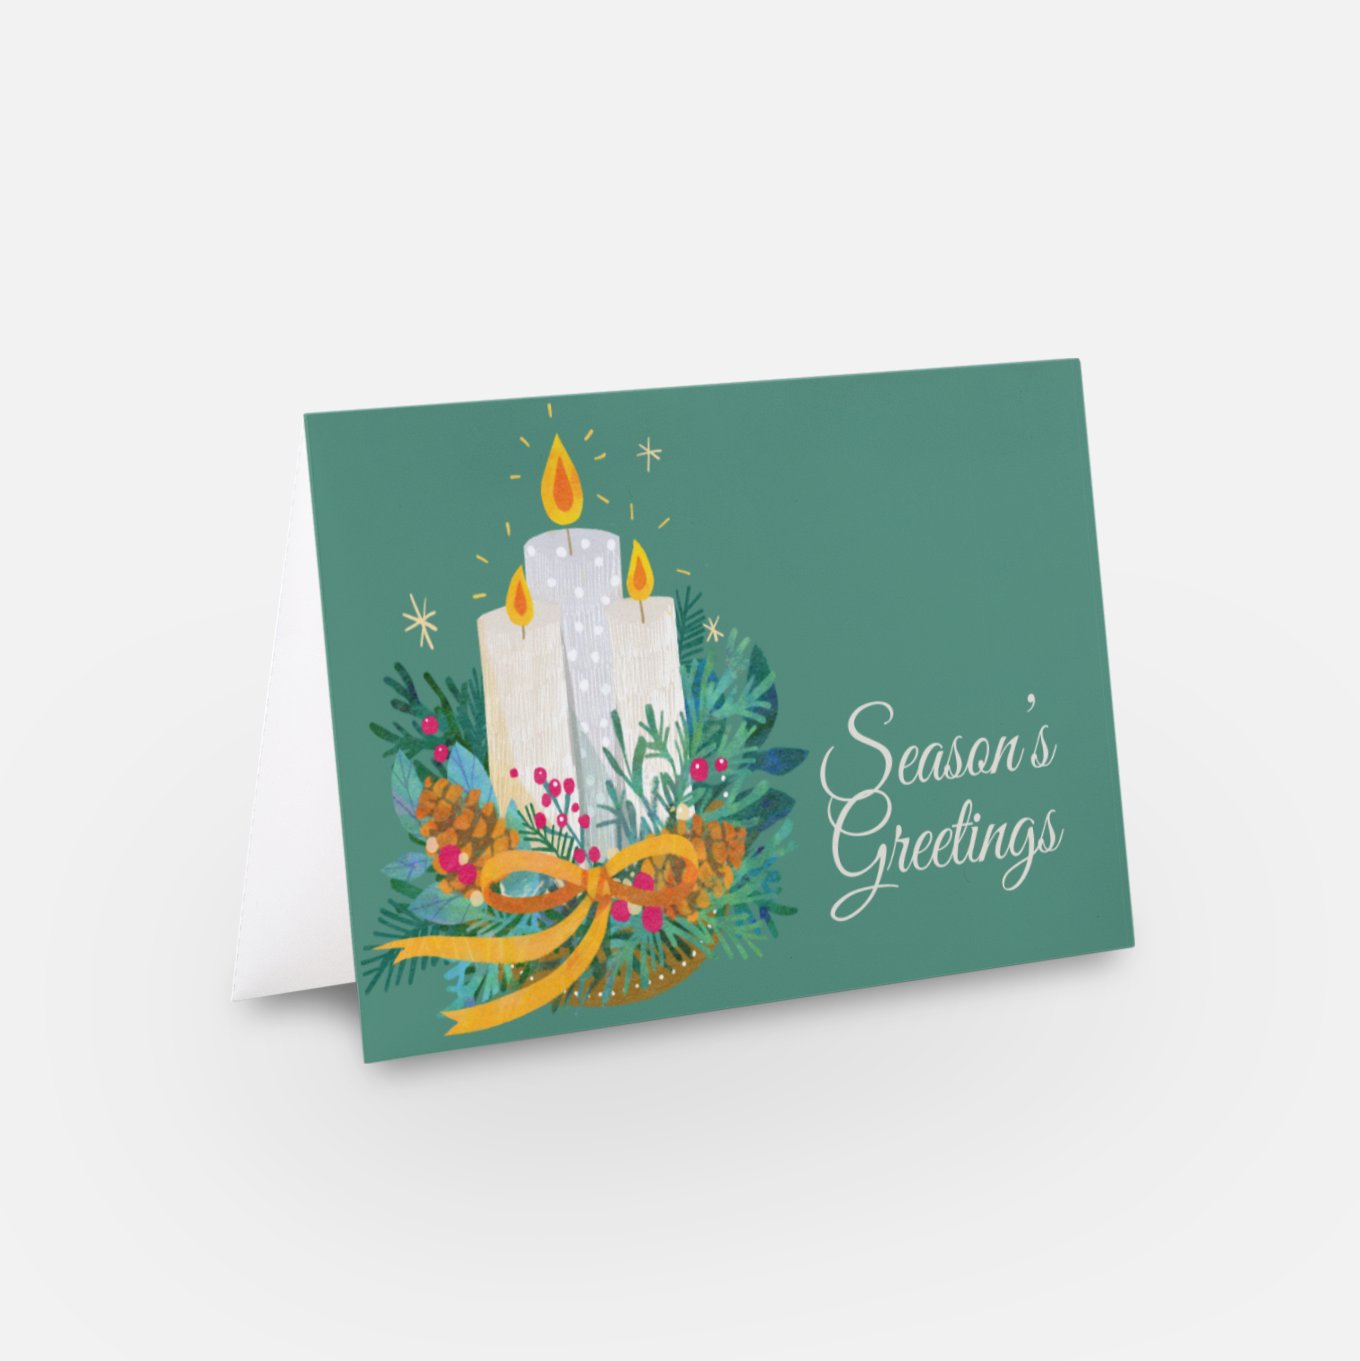 “Season’s Greetings” Christmas Greeting Card